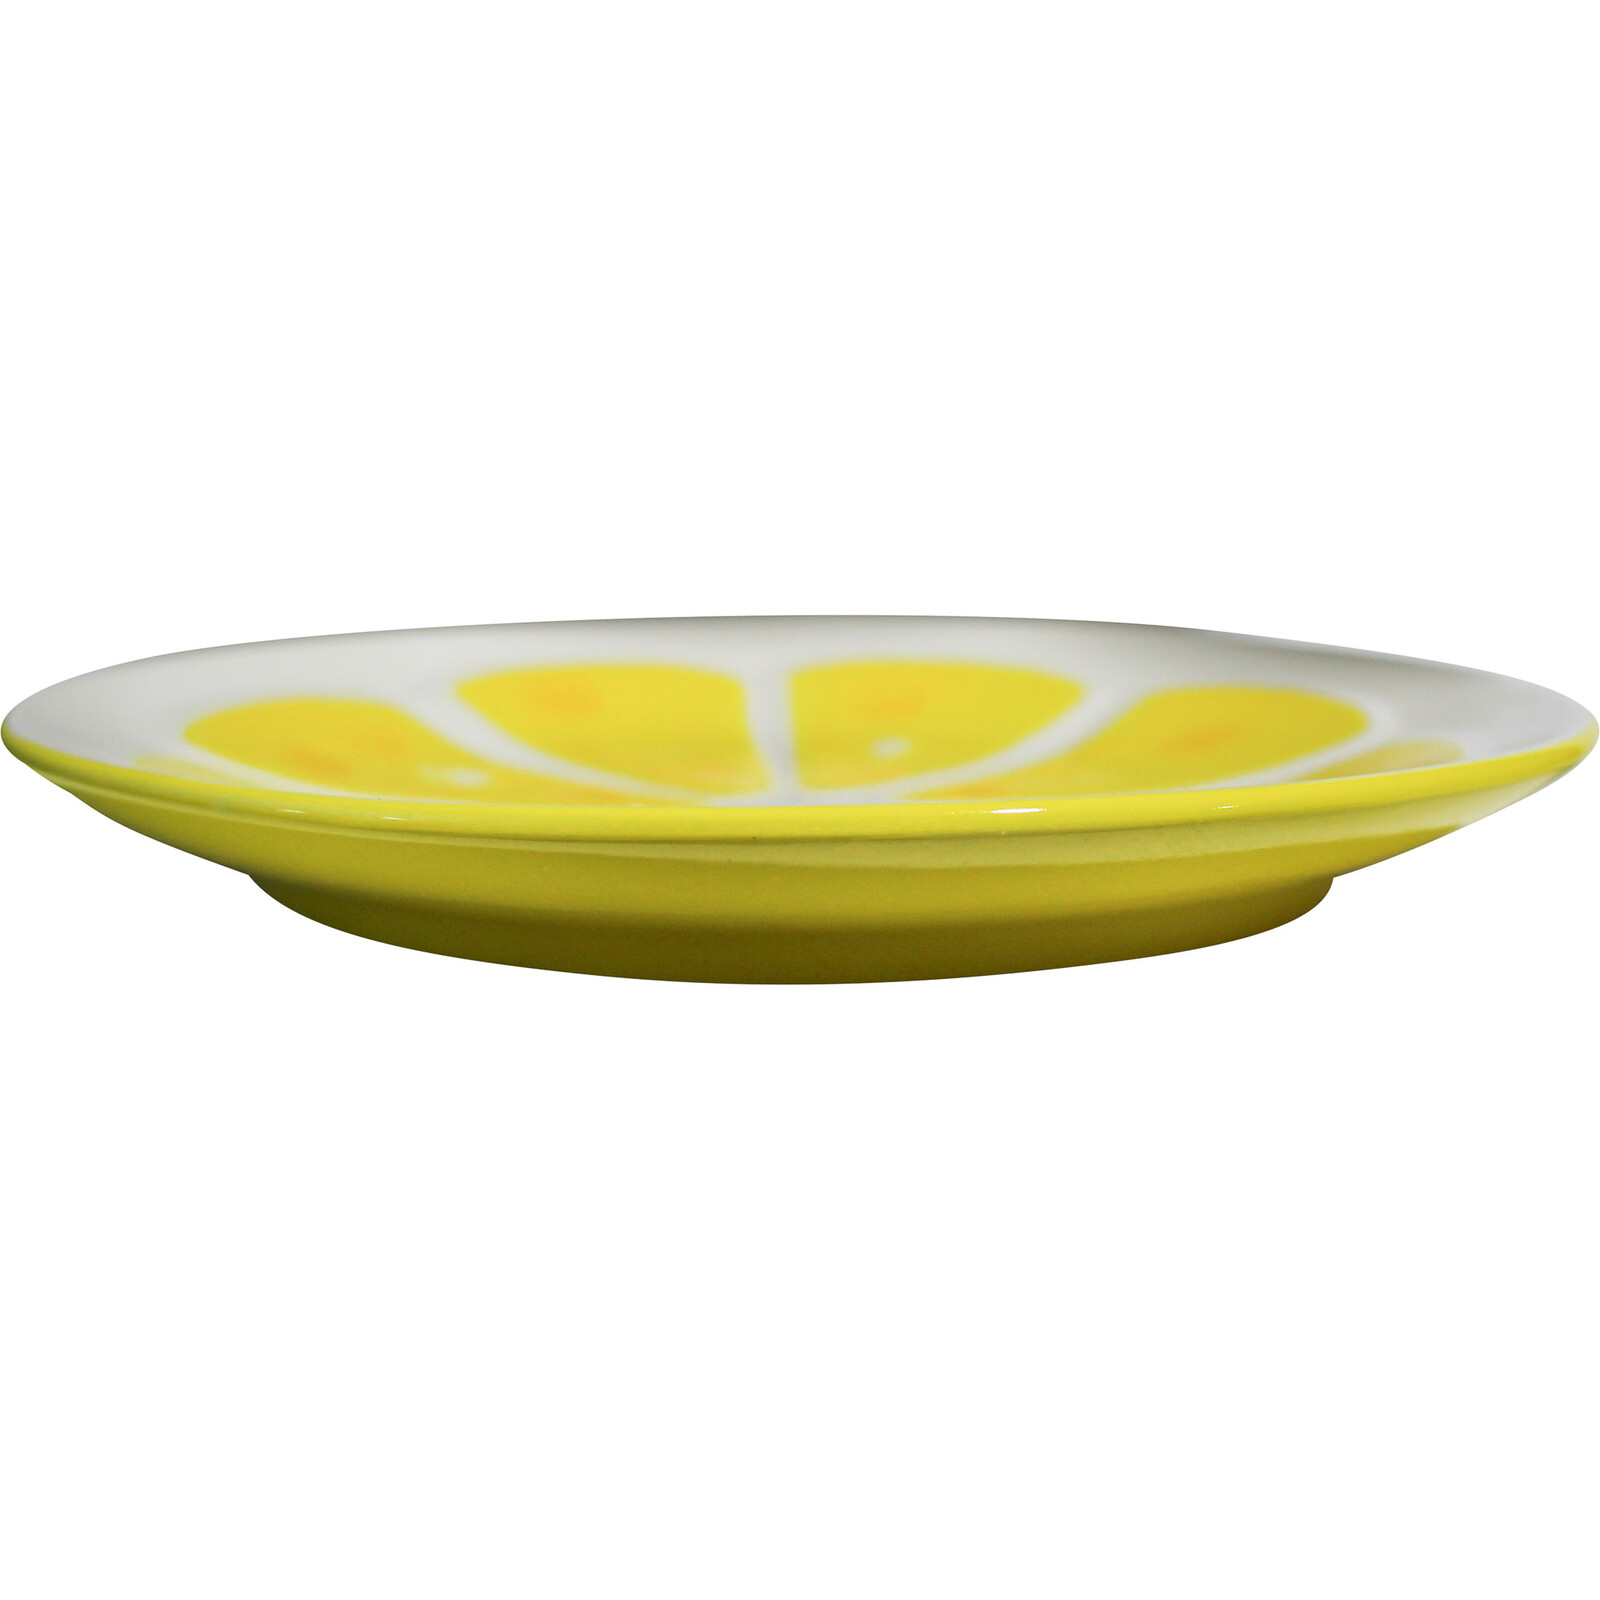 Plate Lemon Slice